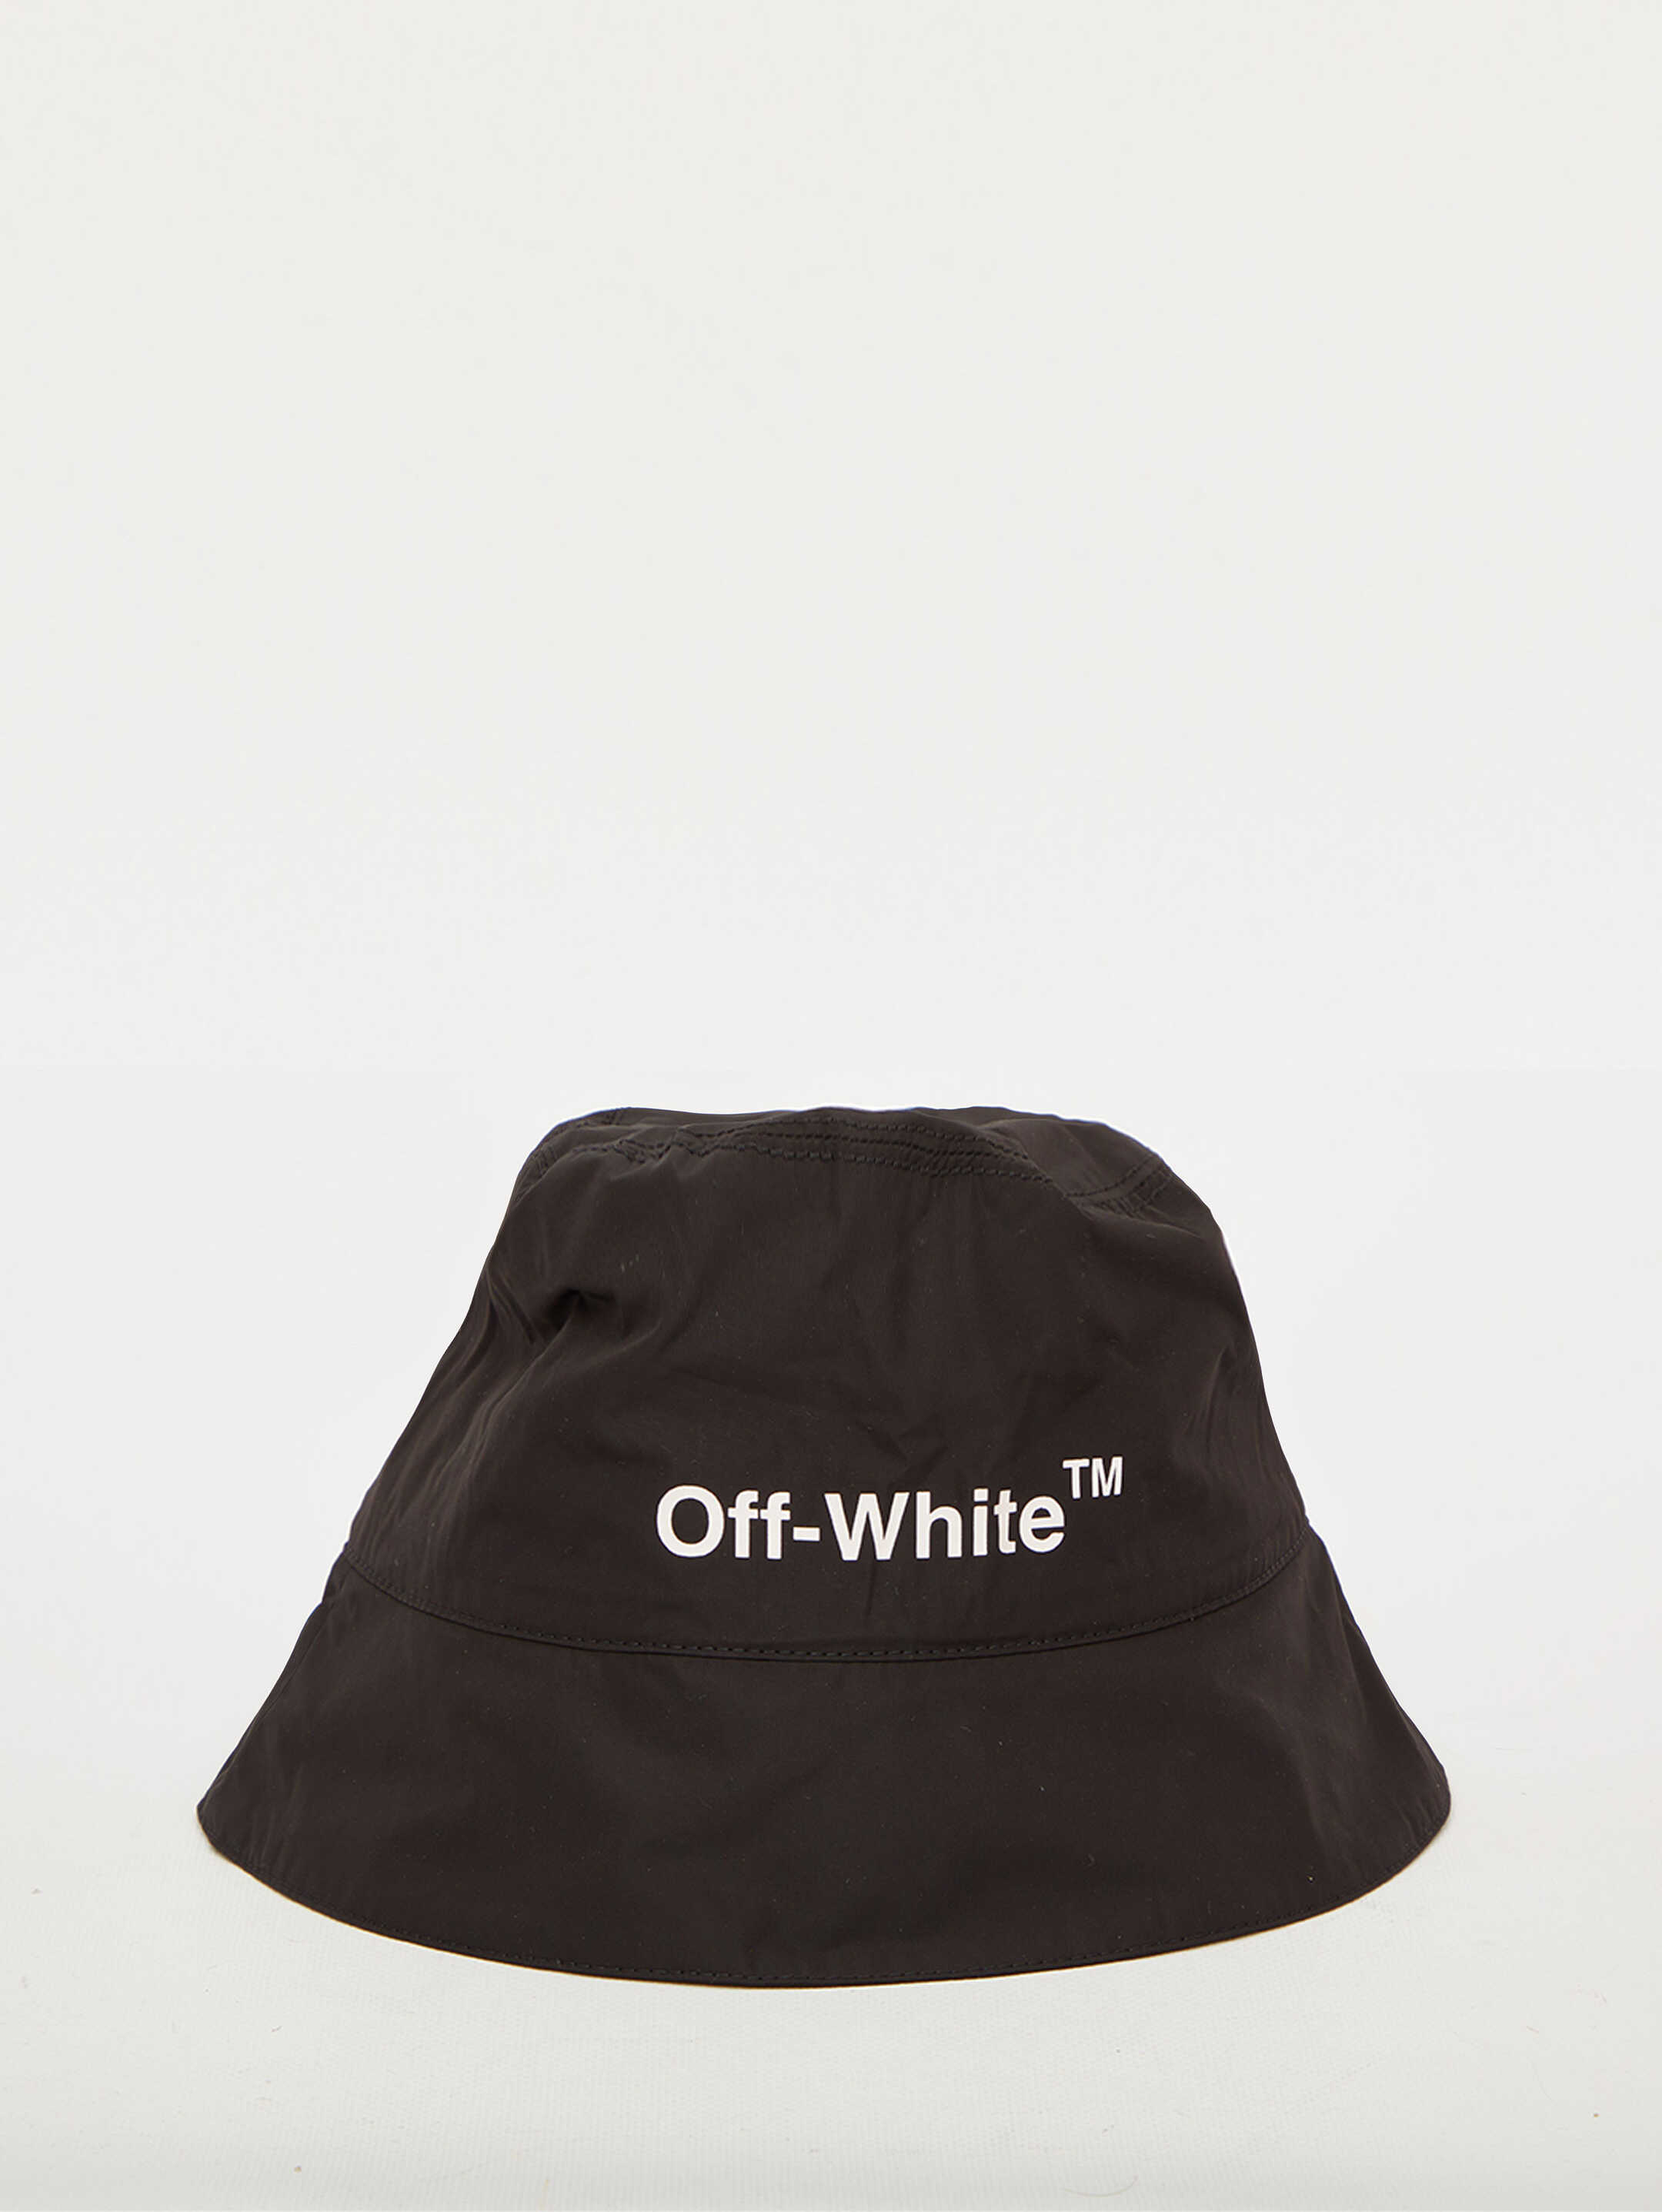 Off-White Helvetica Bucket Hat Black image0